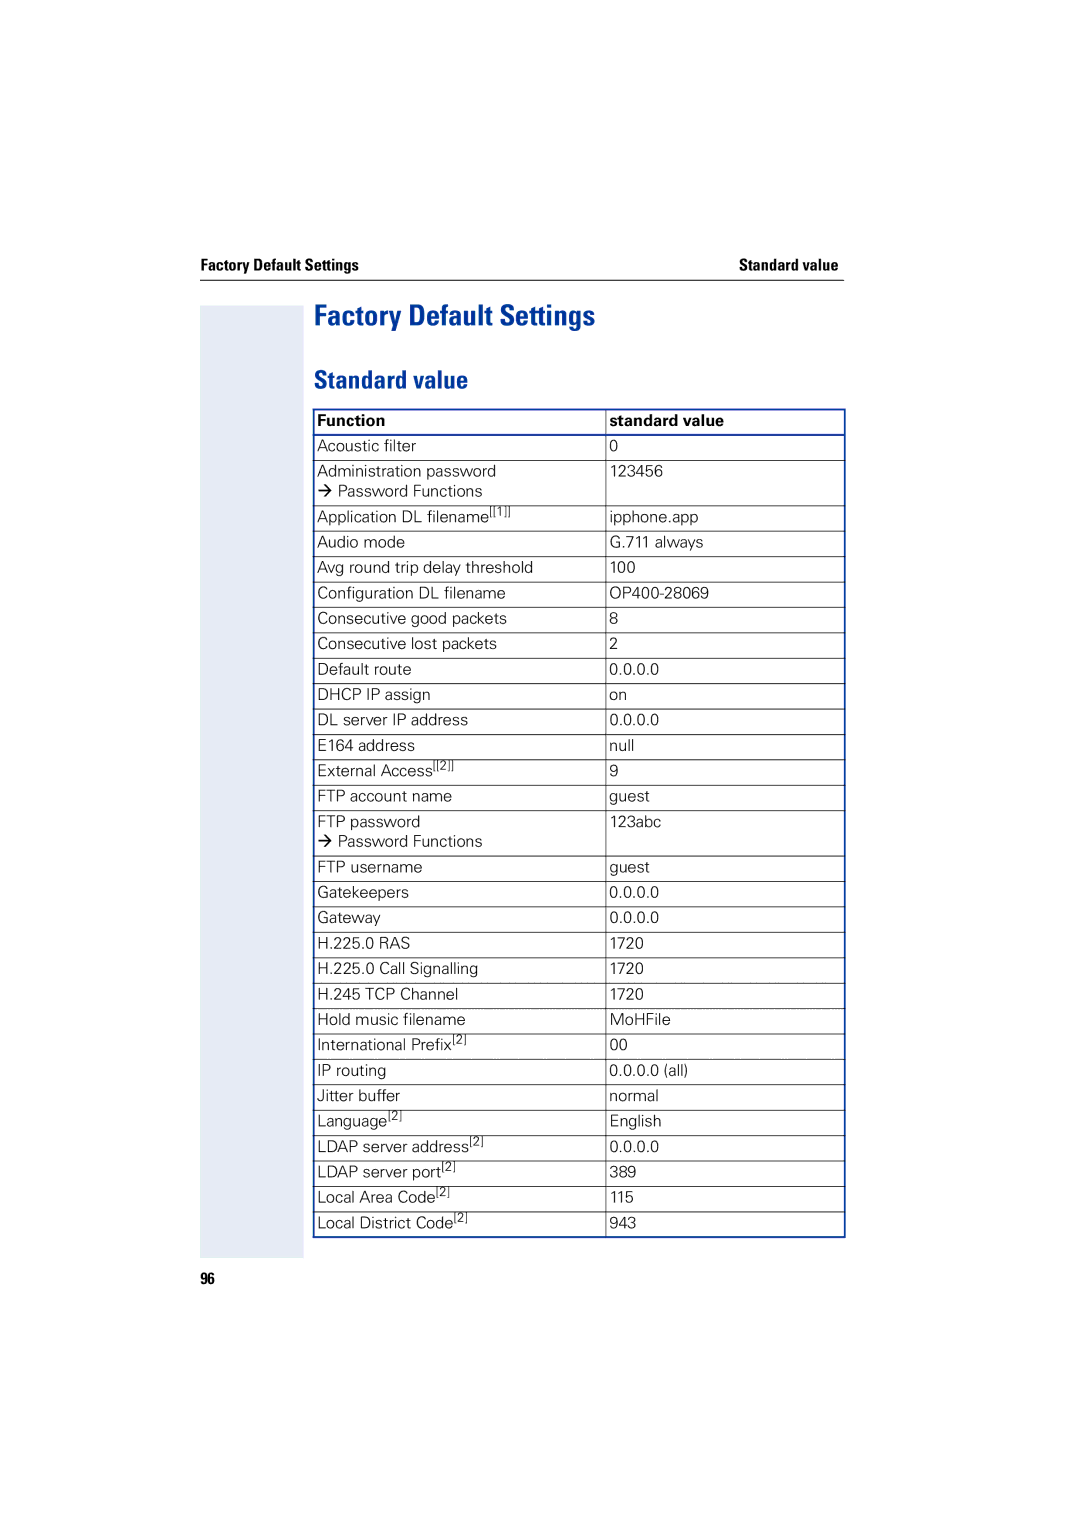 Siemens 2000 manual Factory Default Settings, Function Standard value 